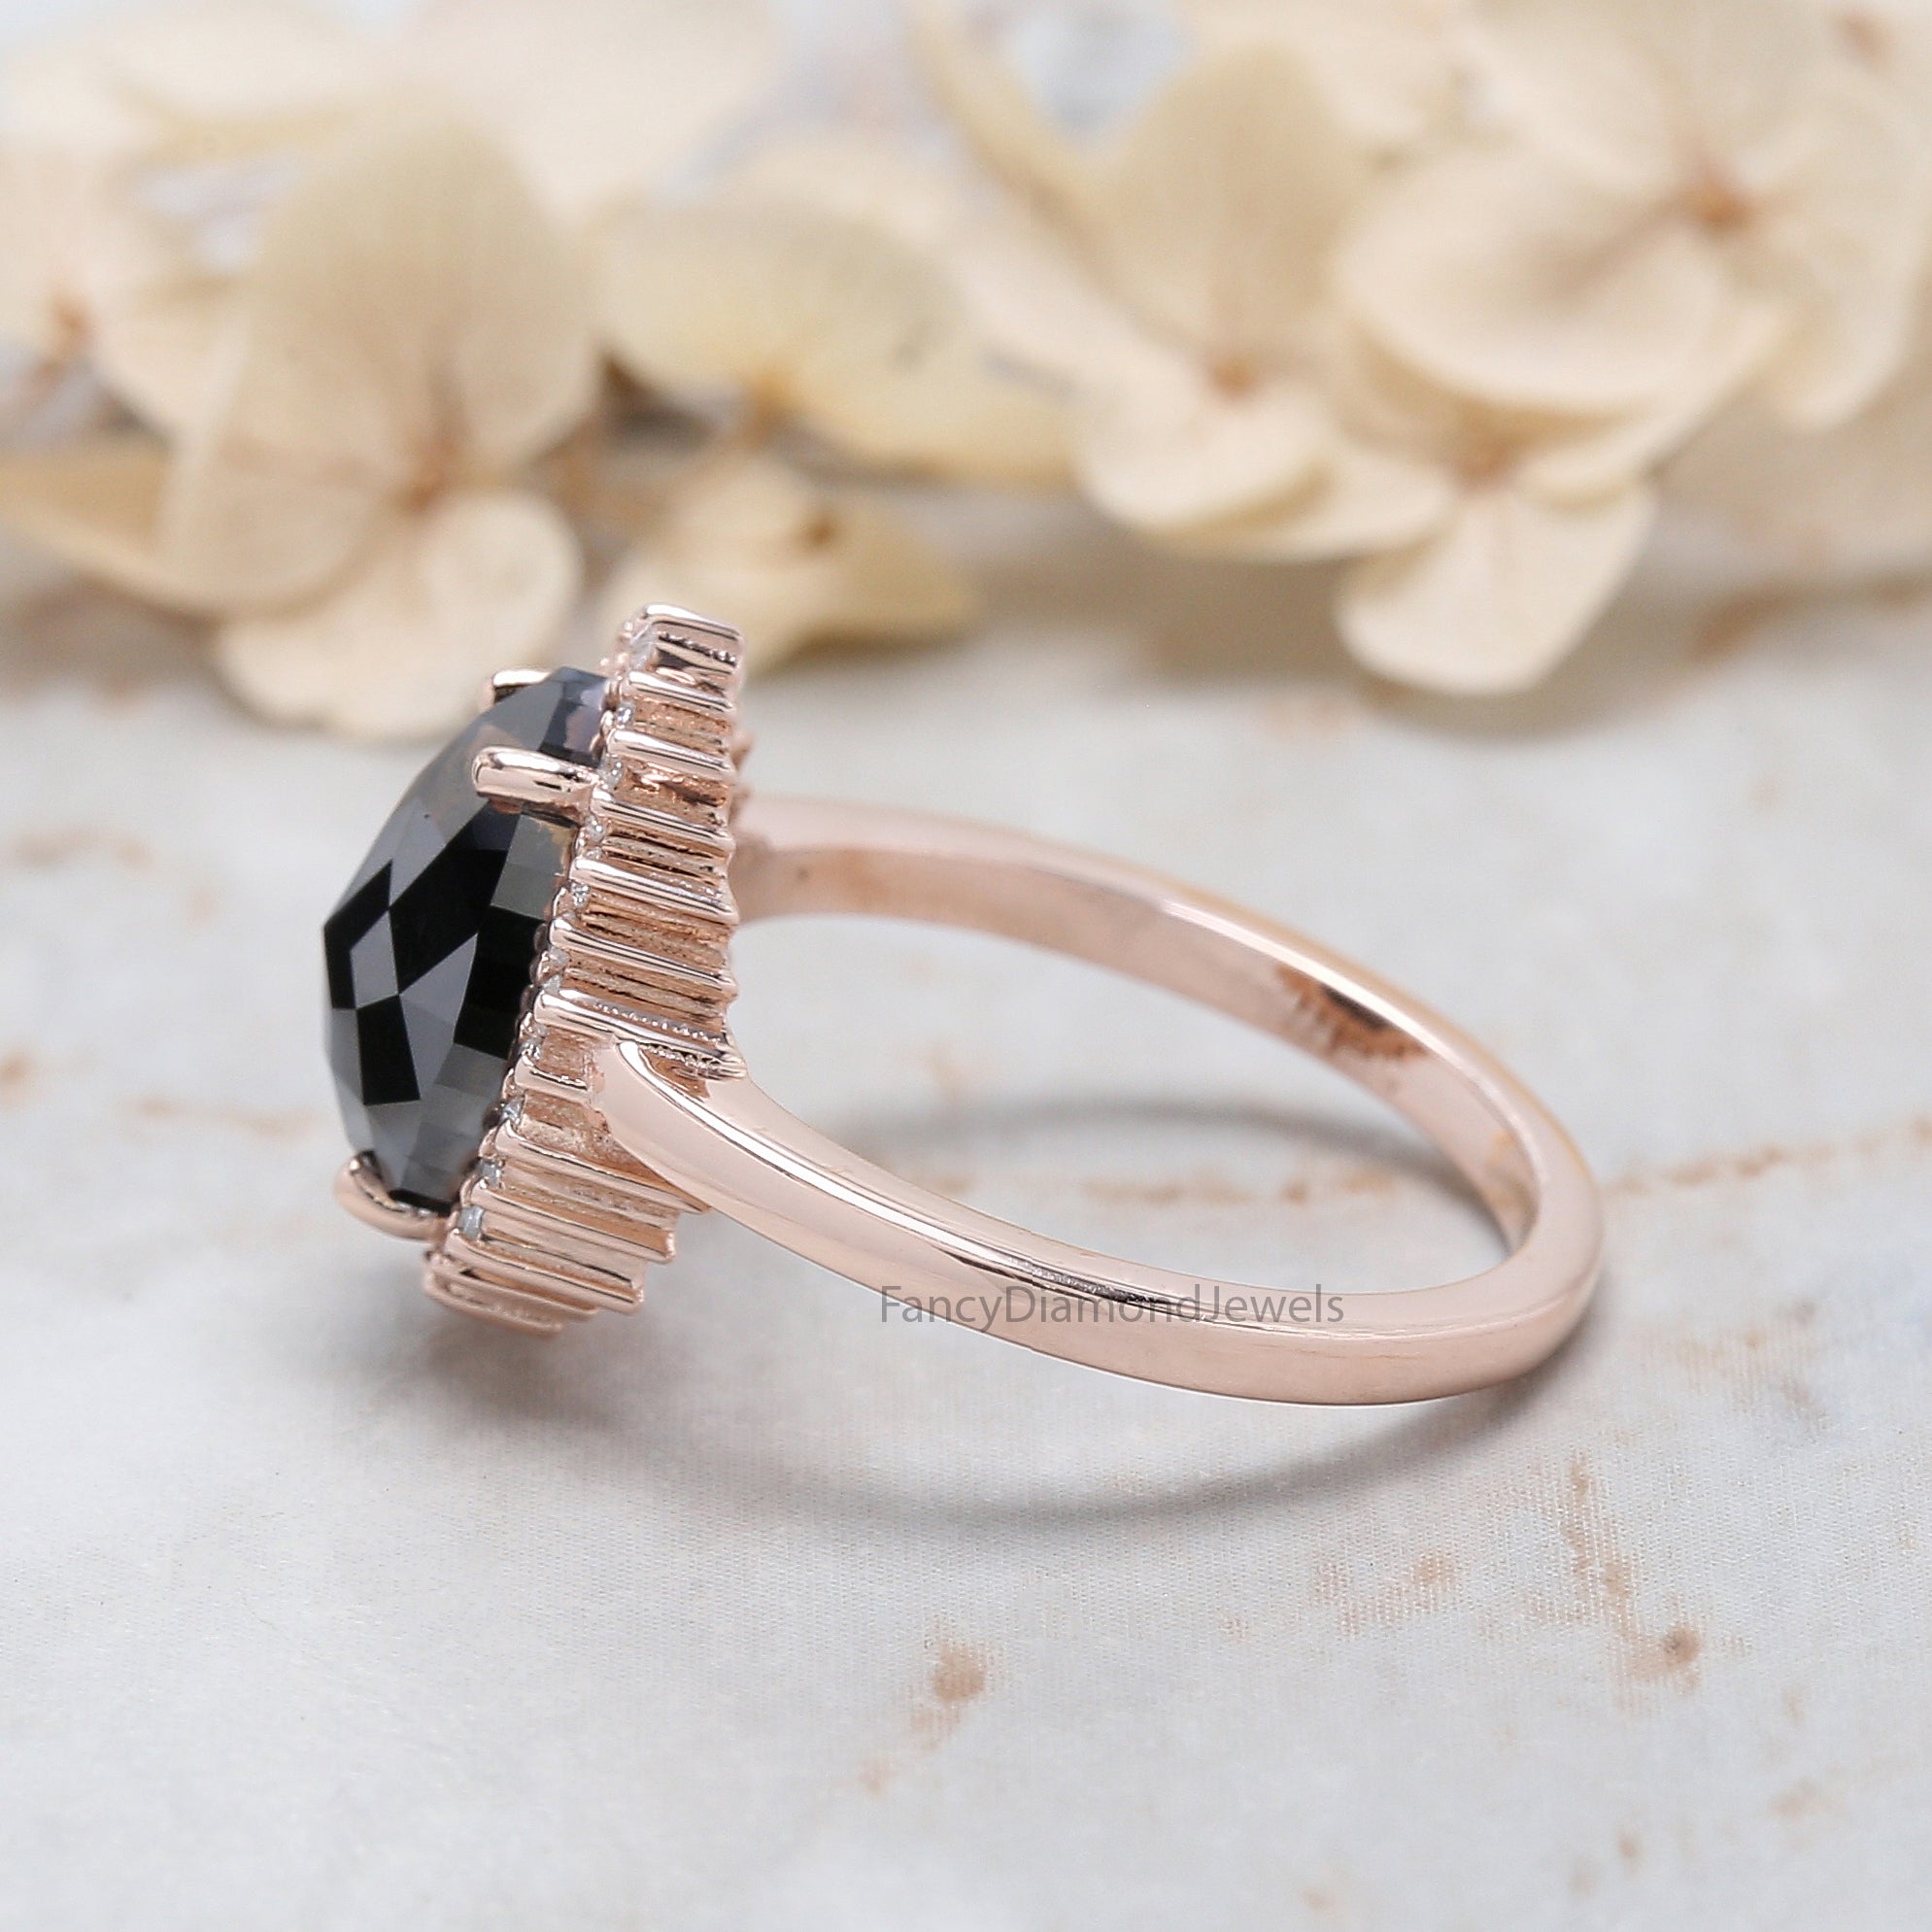 Pear Black Color Diamond Ring, Black Pear Diamond Engagement Ring, Black Diamond Ring, Halo Diamond Ring, Pear Cut Ring, Pear Ring KD873